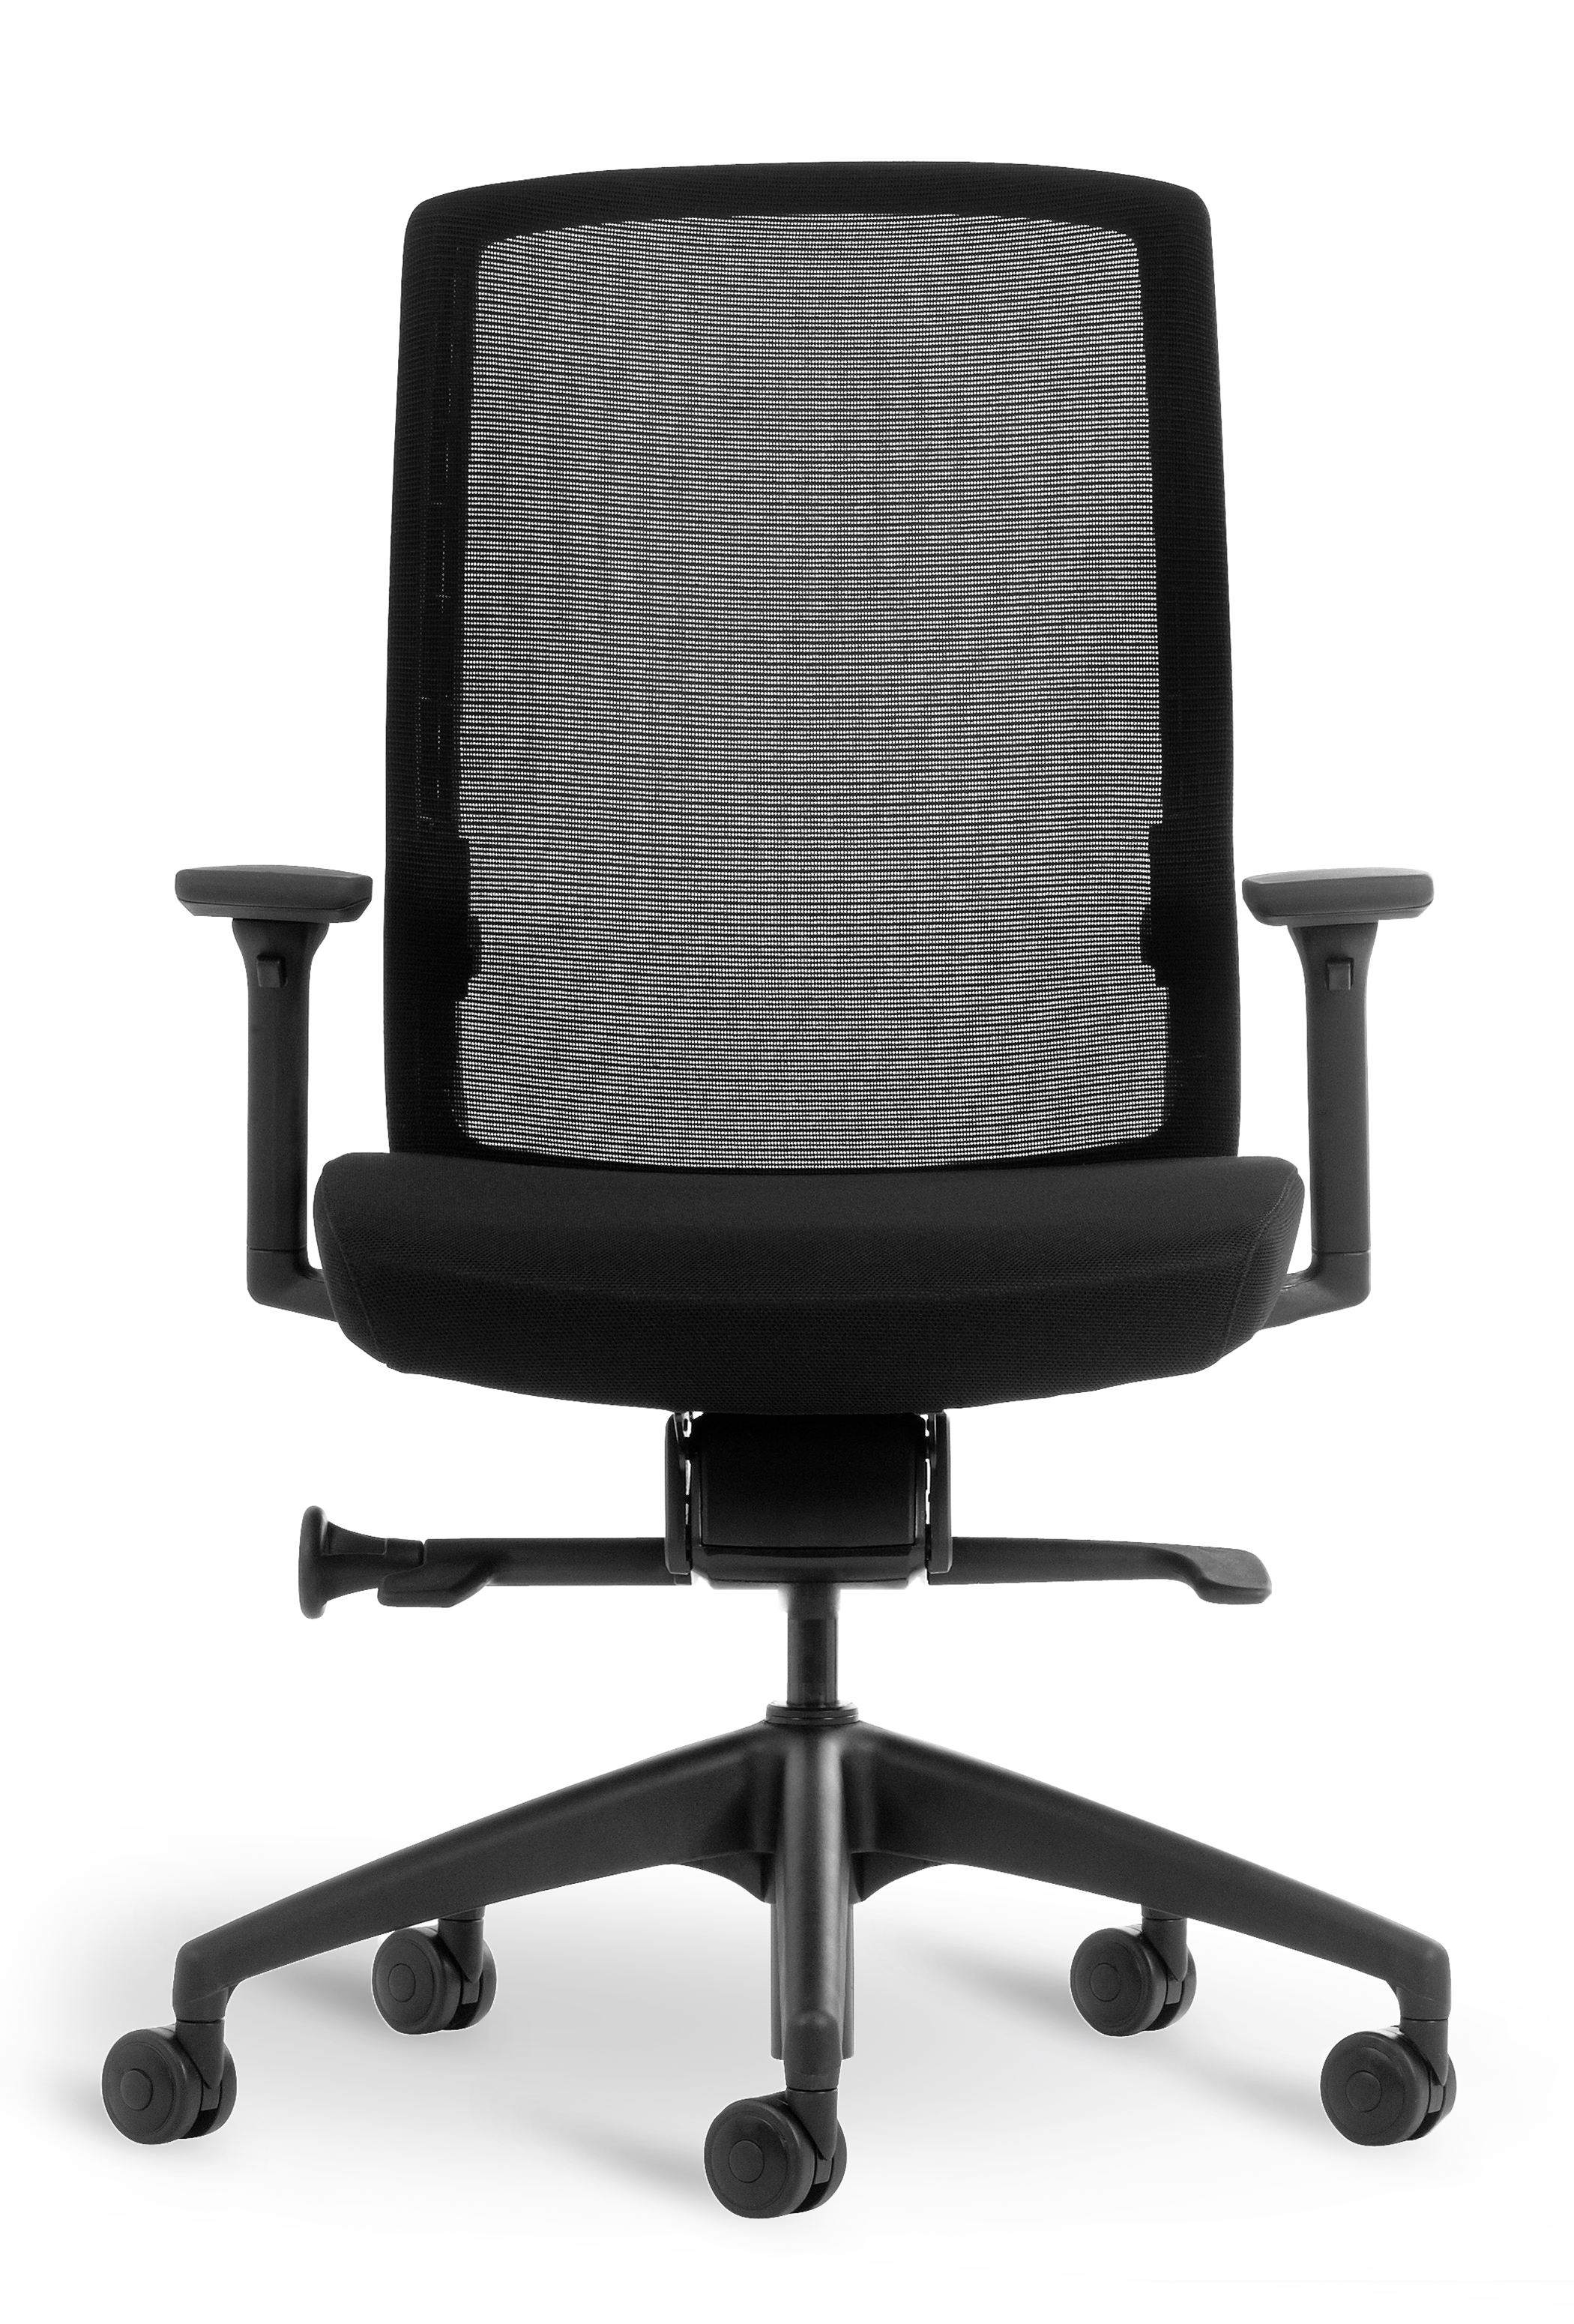 WS - J1 task chair - Black, black base (Front)